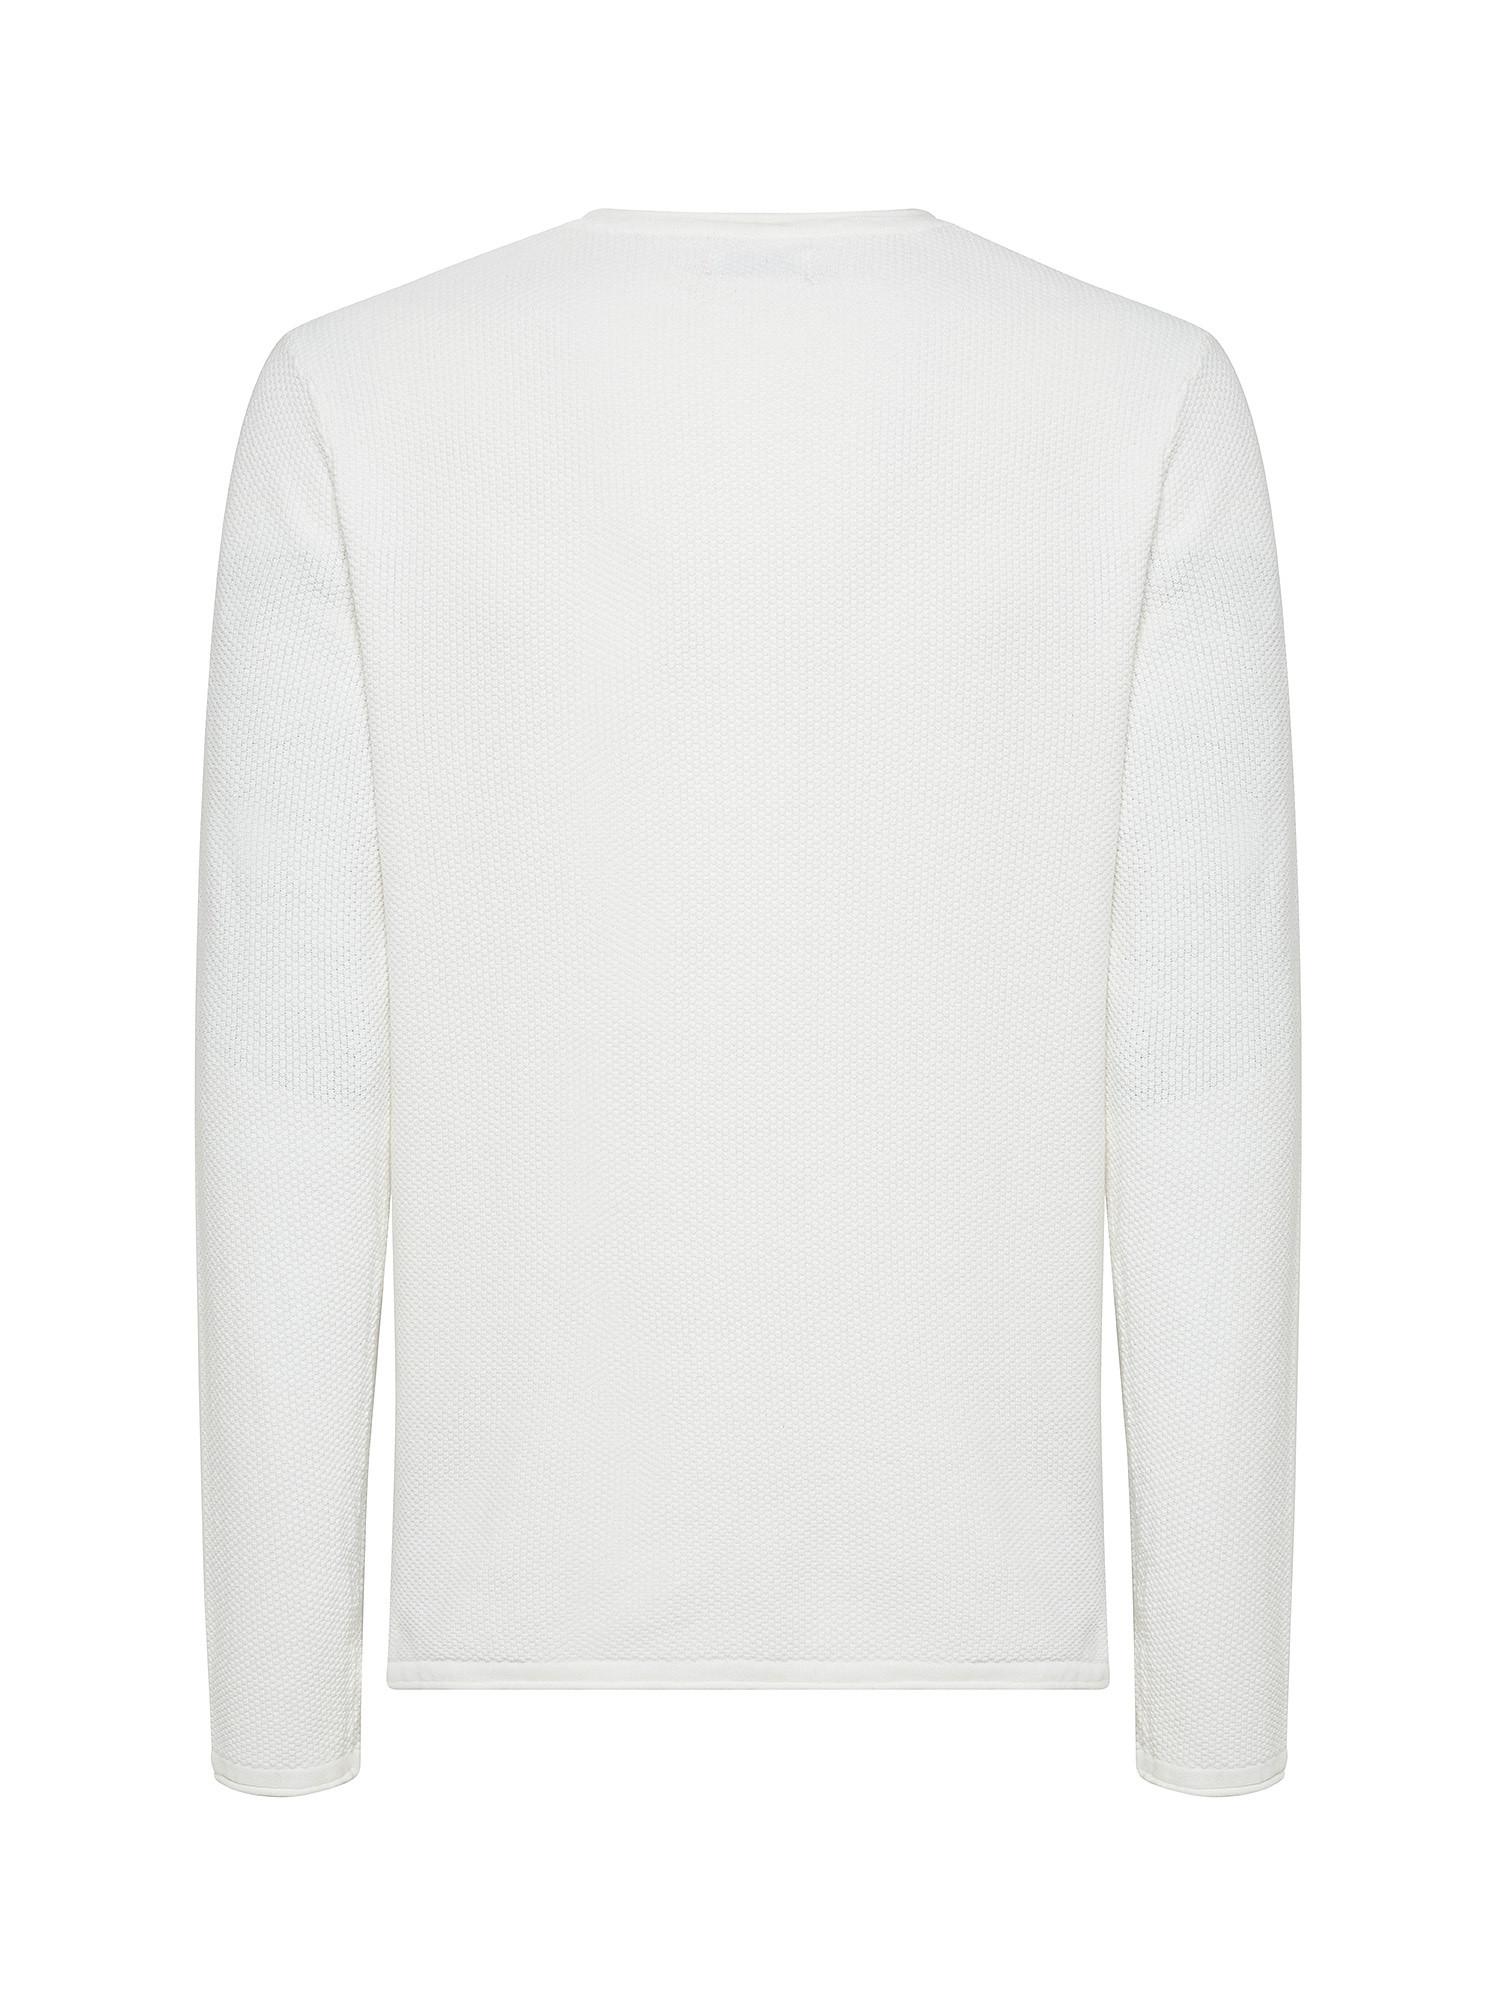 Jack & Jones - Pullover in cotone, Bianco, large image number 1